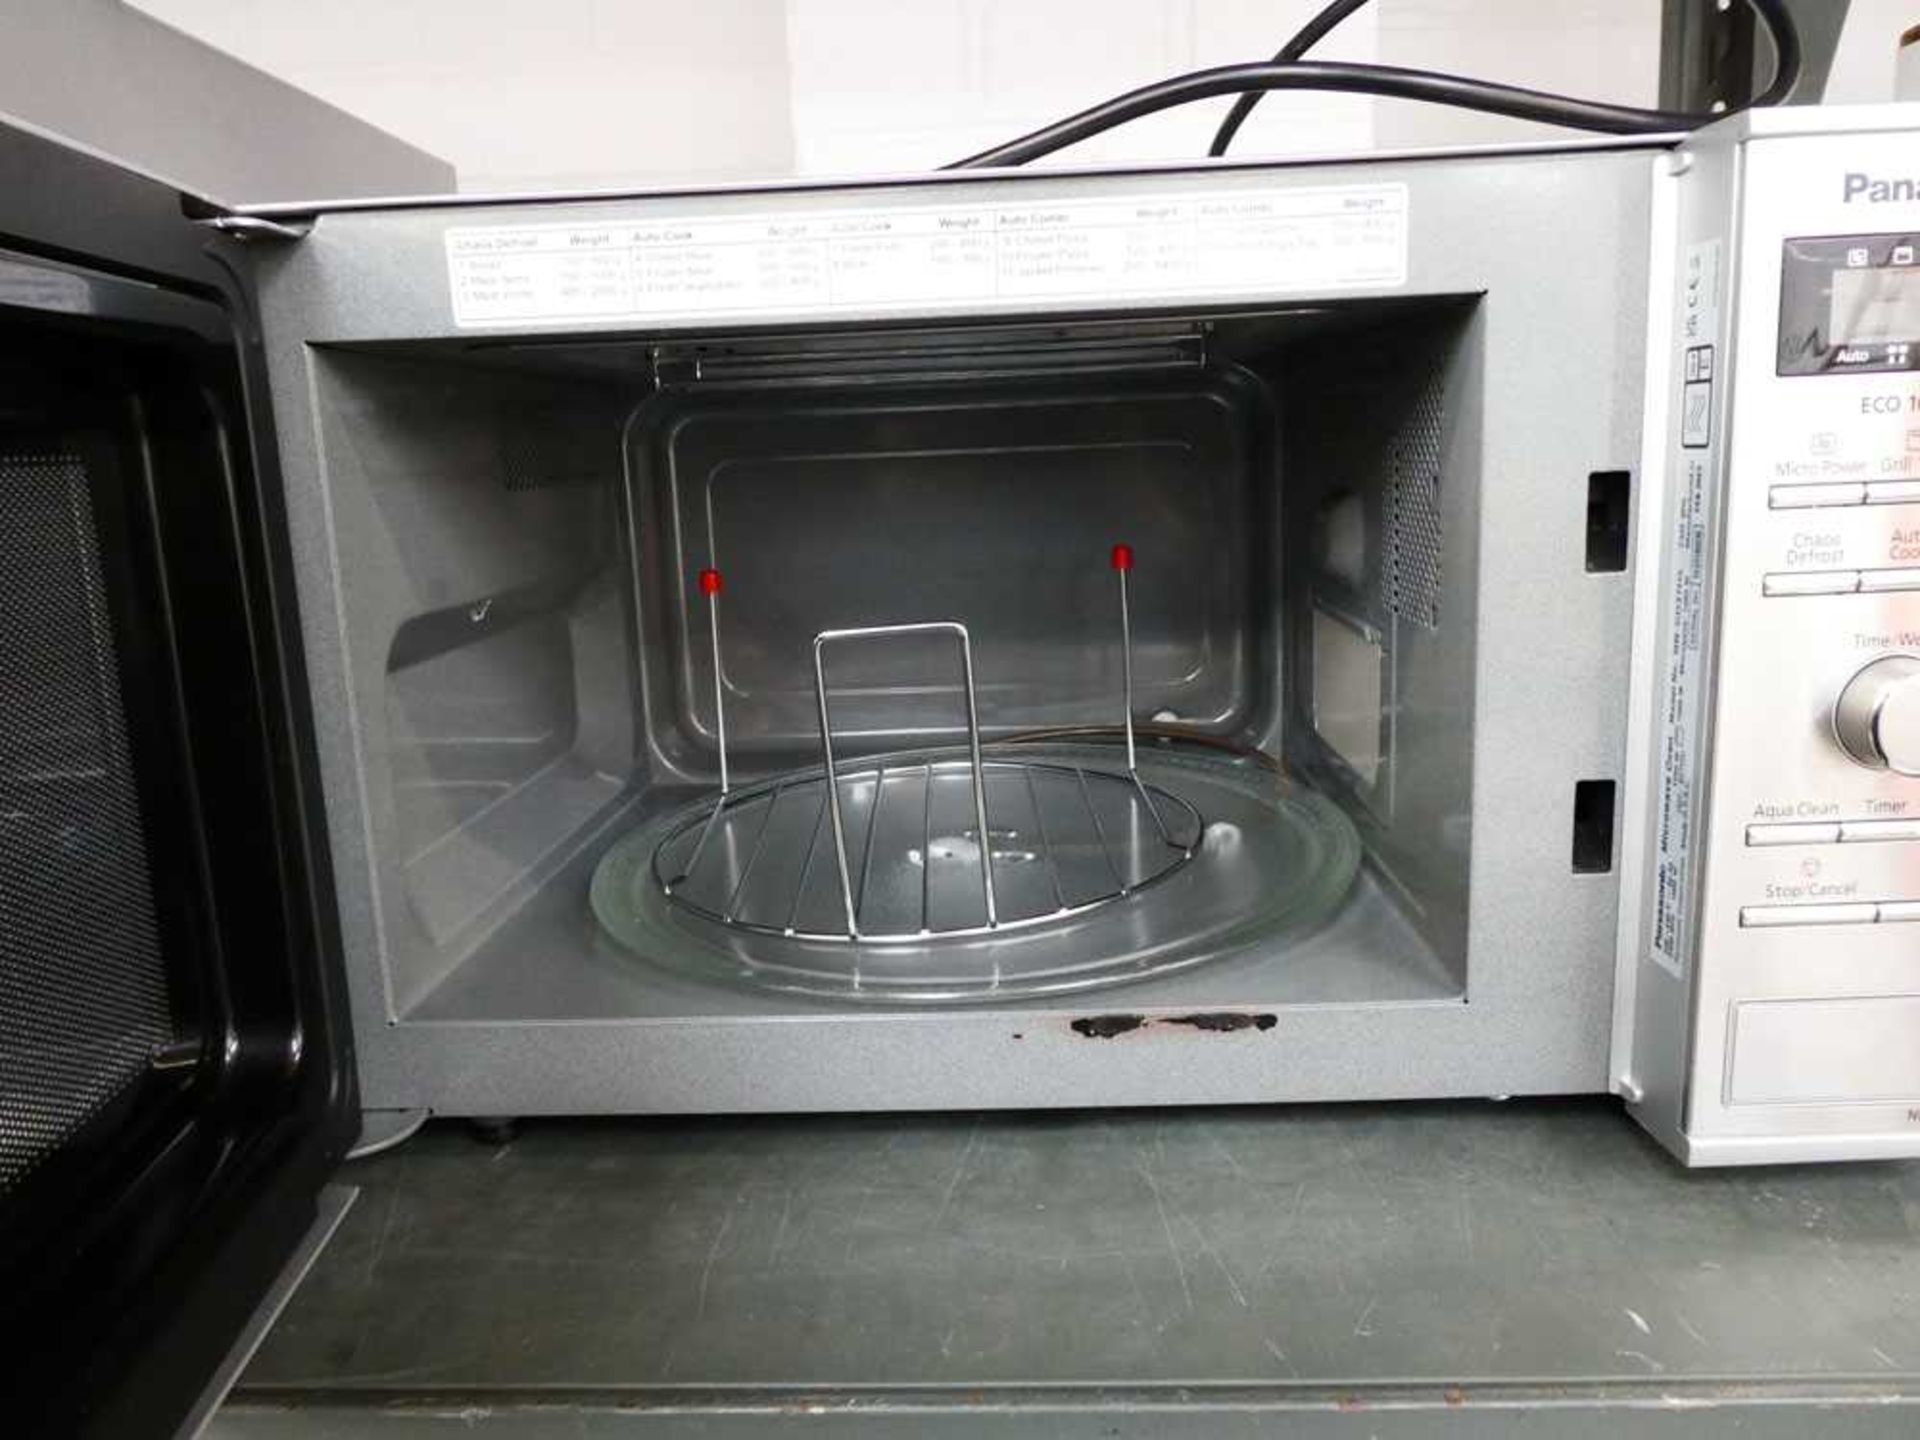 +VAT Panasonic NN-GD37HS invertor microwave - Image 2 of 2